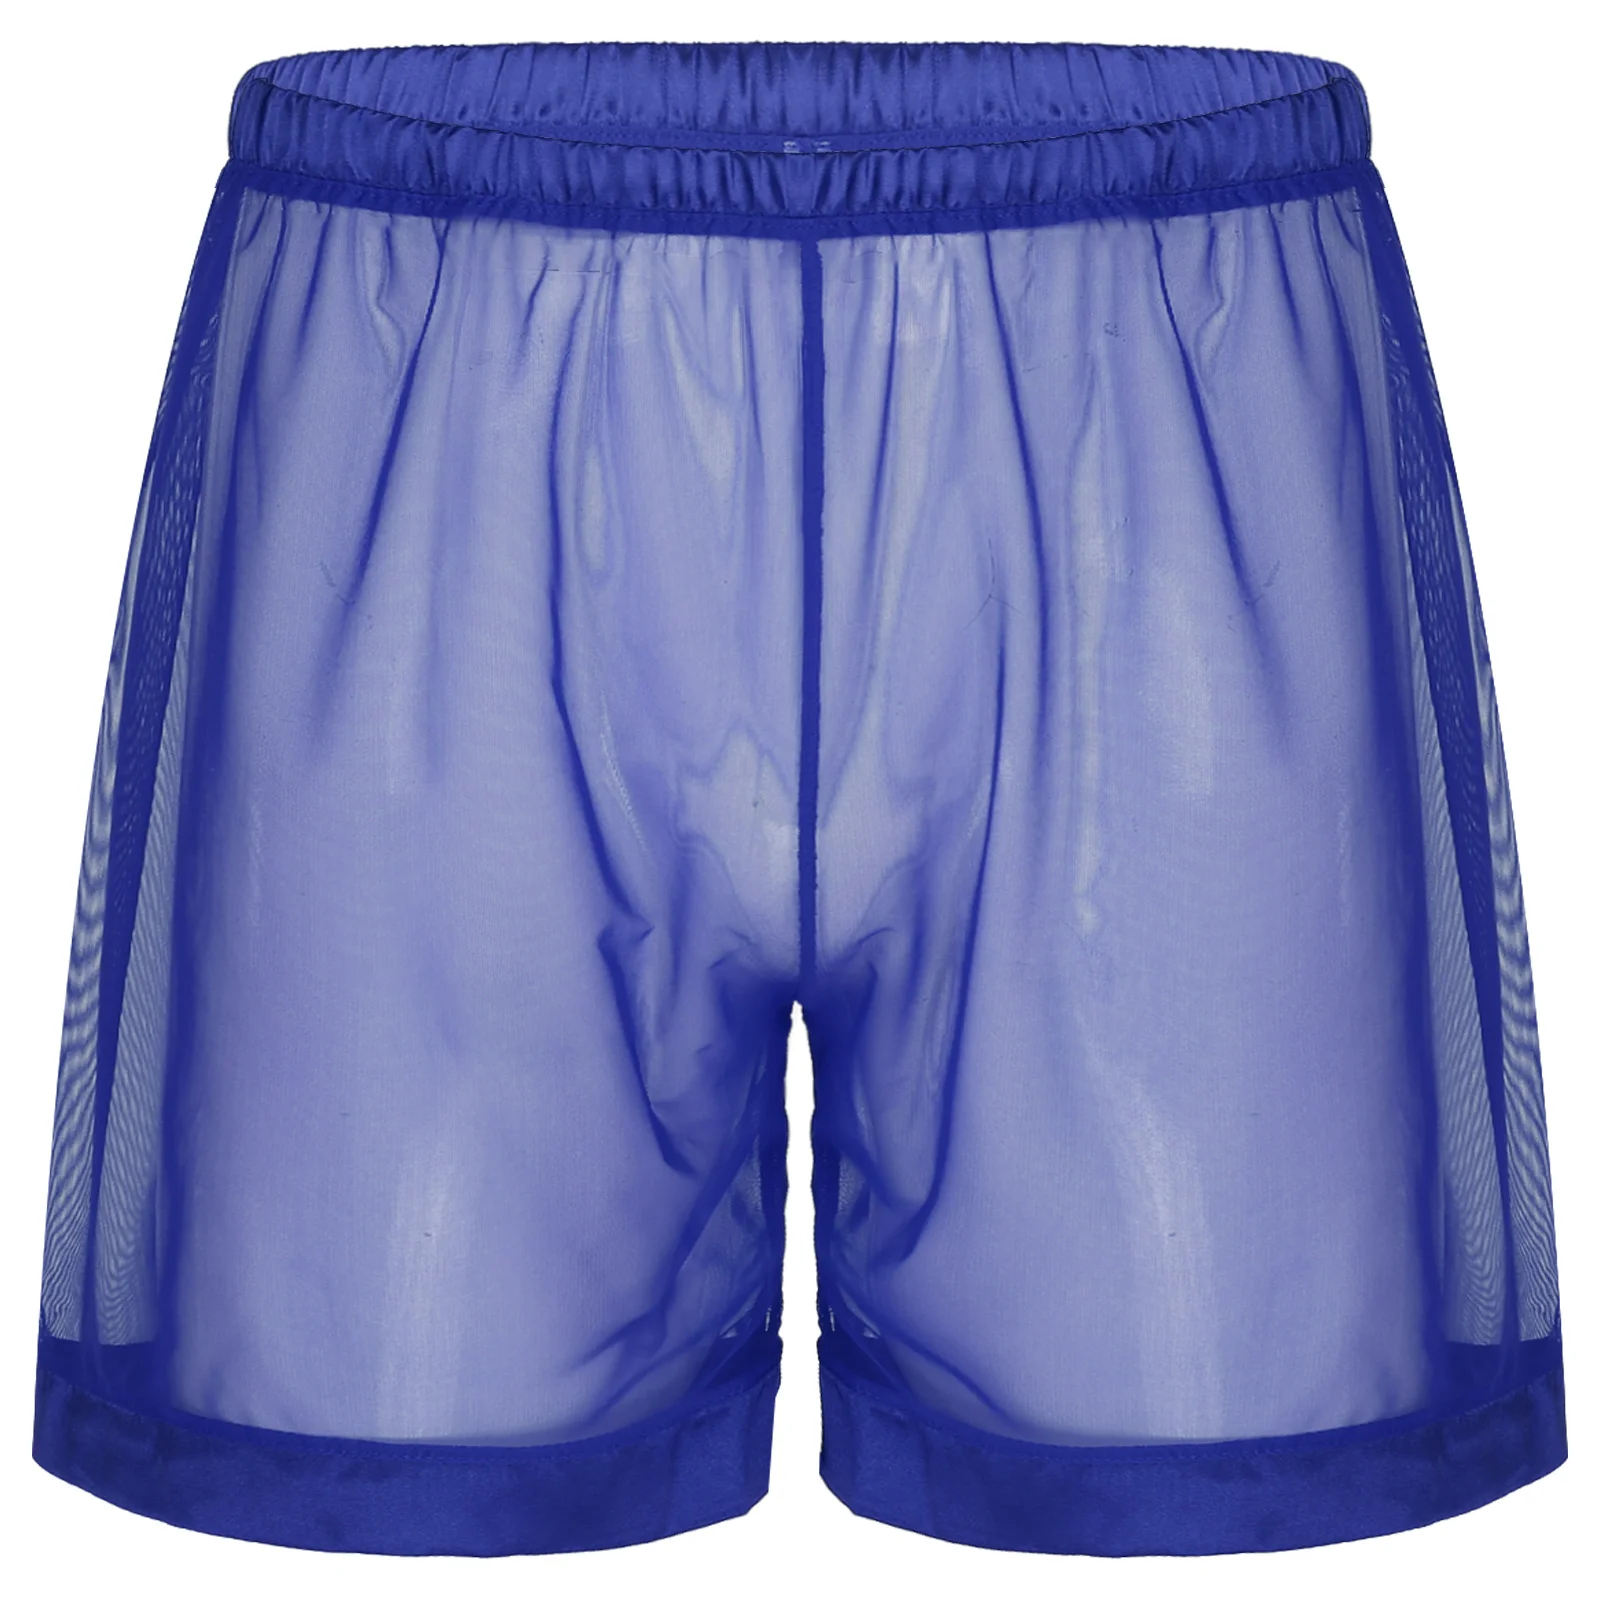 Mens Male  Transparent Briefs Underwear Lingerie See-through Mesh Loose Lounge Boxer Shorts Lounge wear Clubwear Nightwear